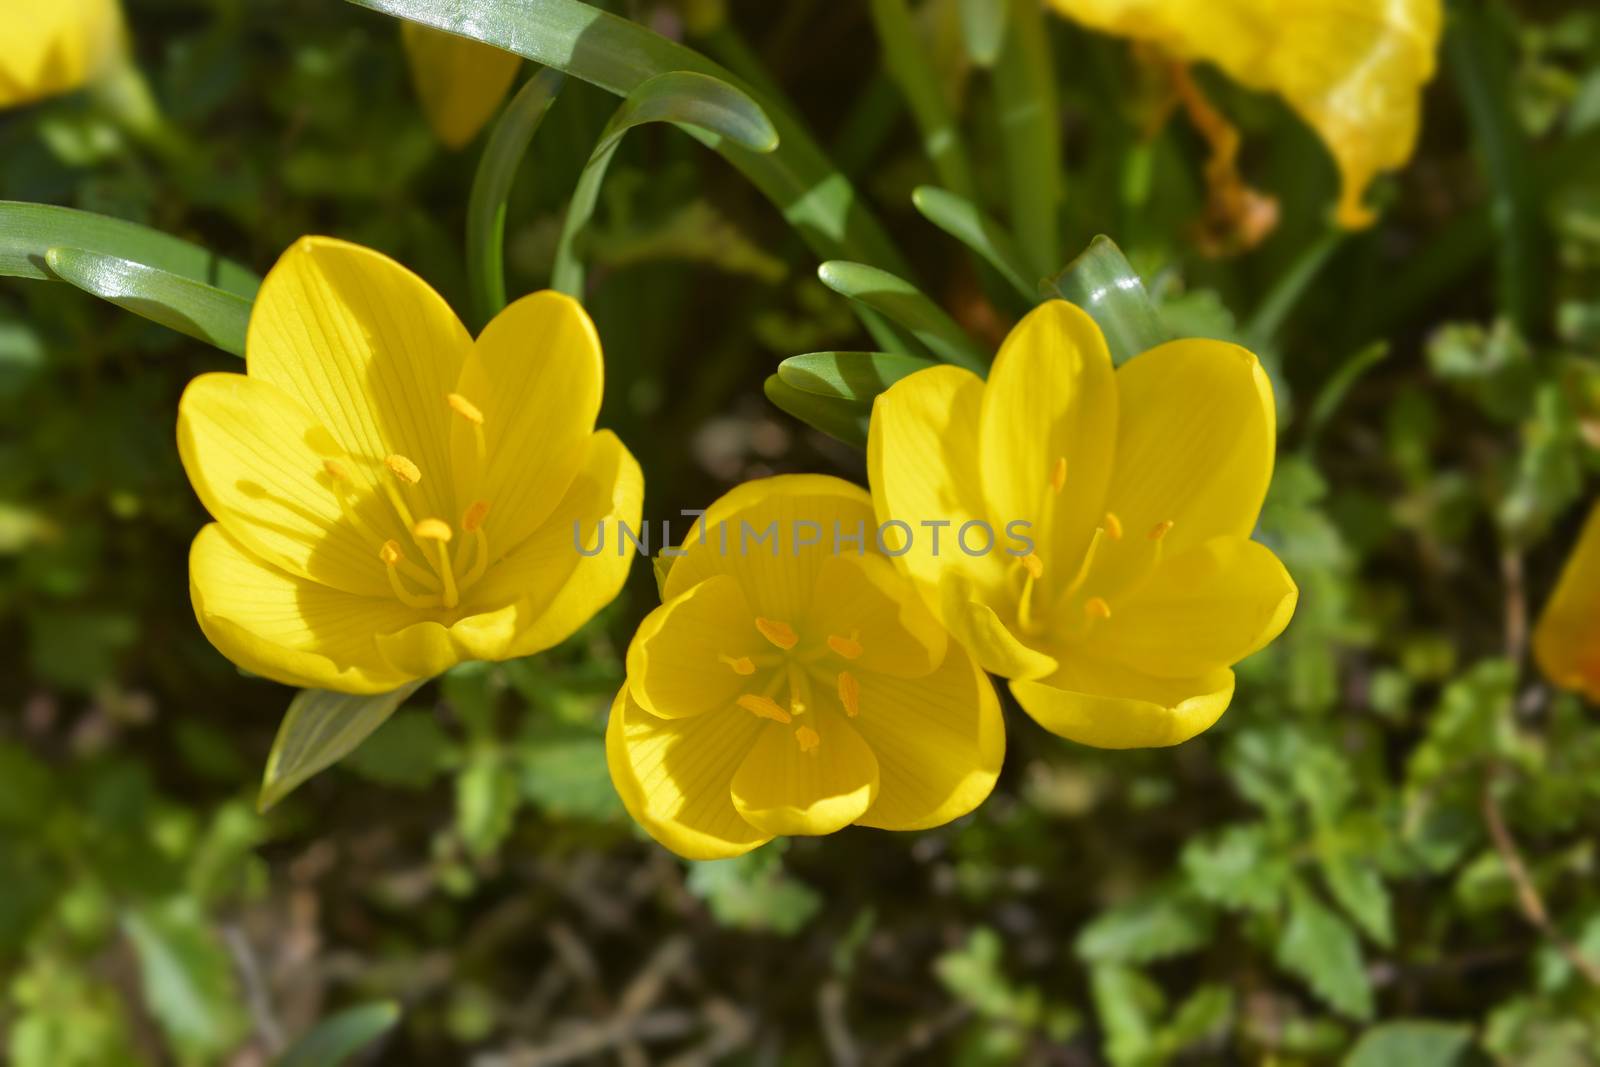 Winter daffodil by nahhan